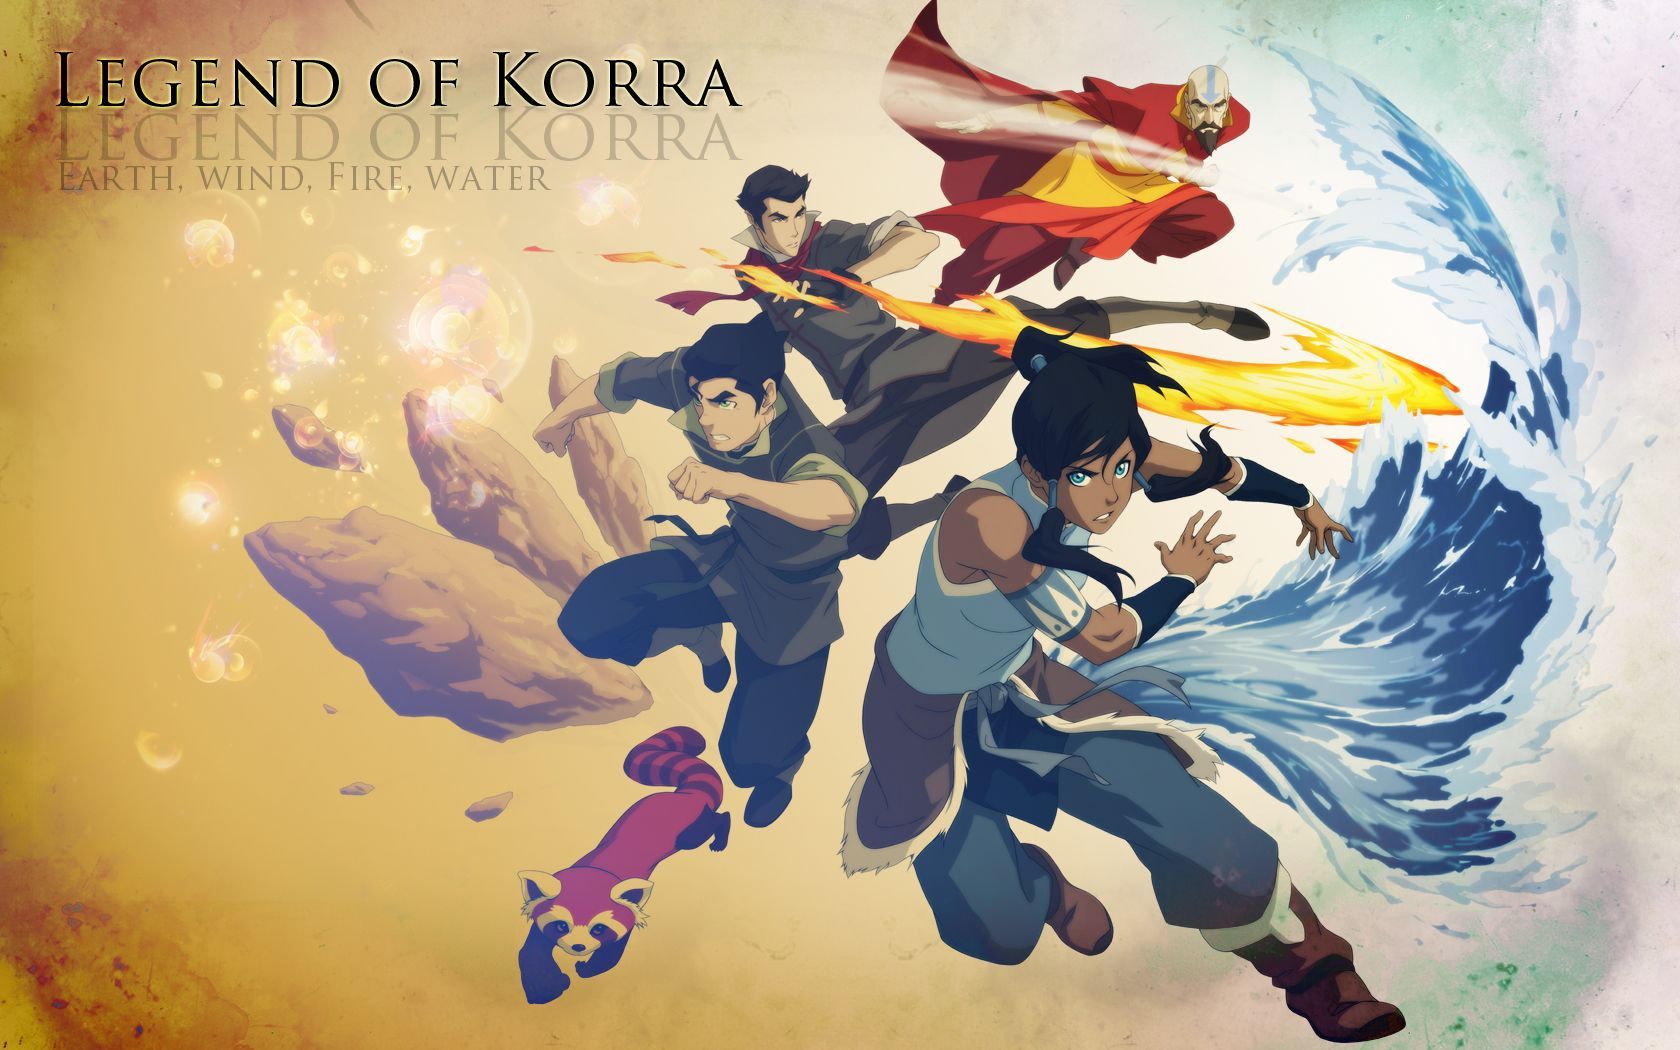 Avatar the last Airbender Wallpaper for Download. Legend of korra